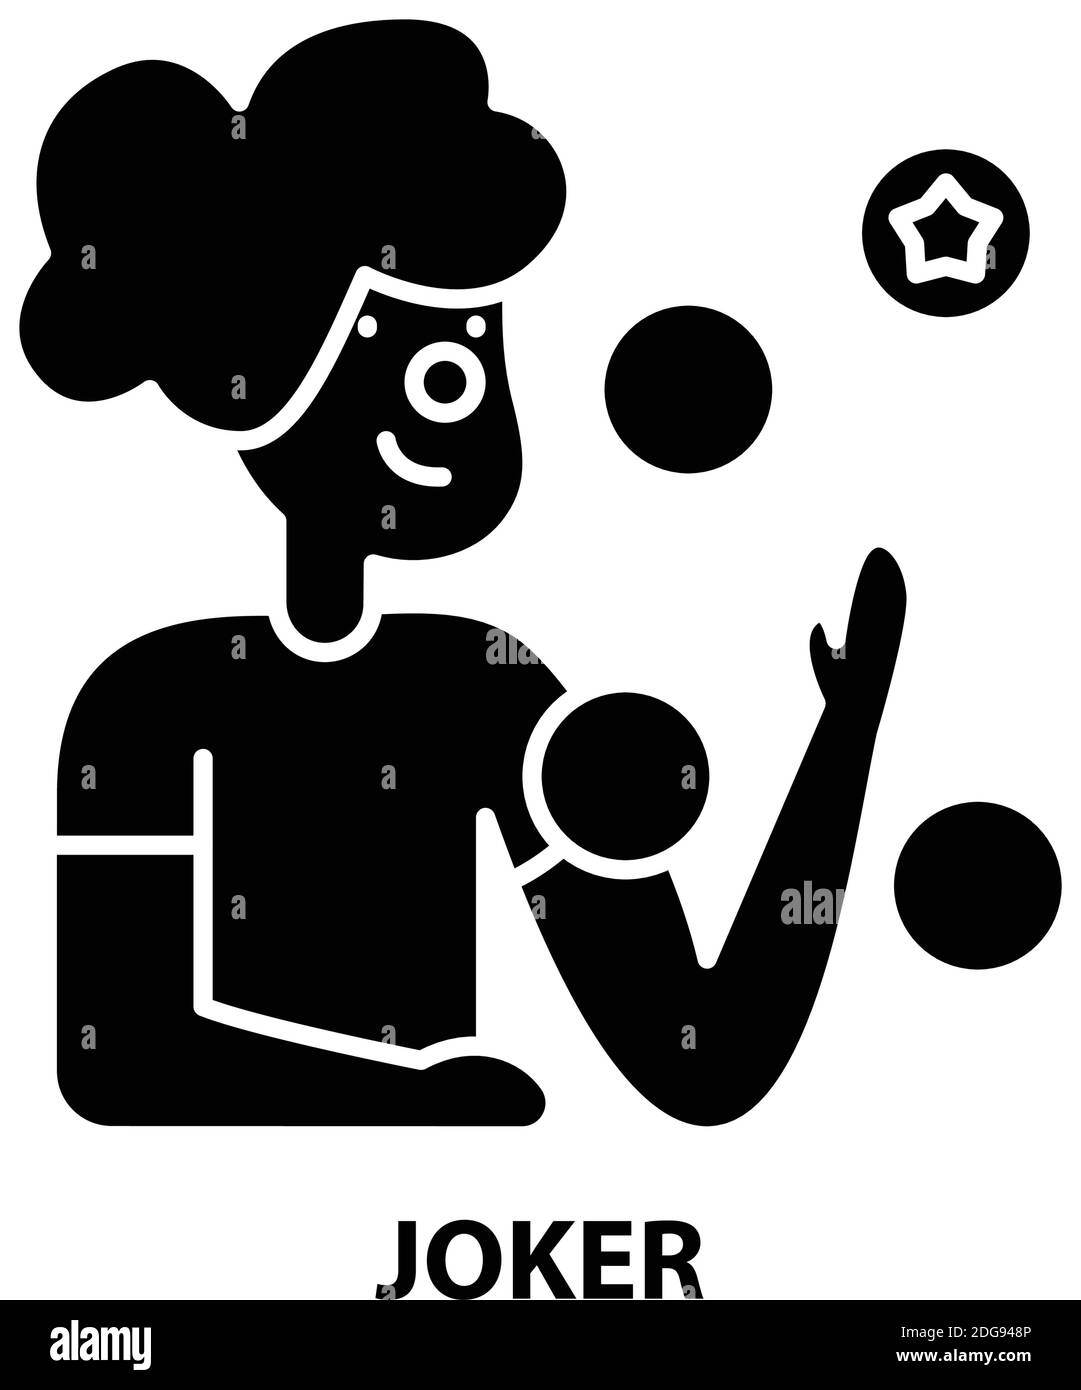 joker icon, black vector sign with editable strokes, concept illustration Stock Vector